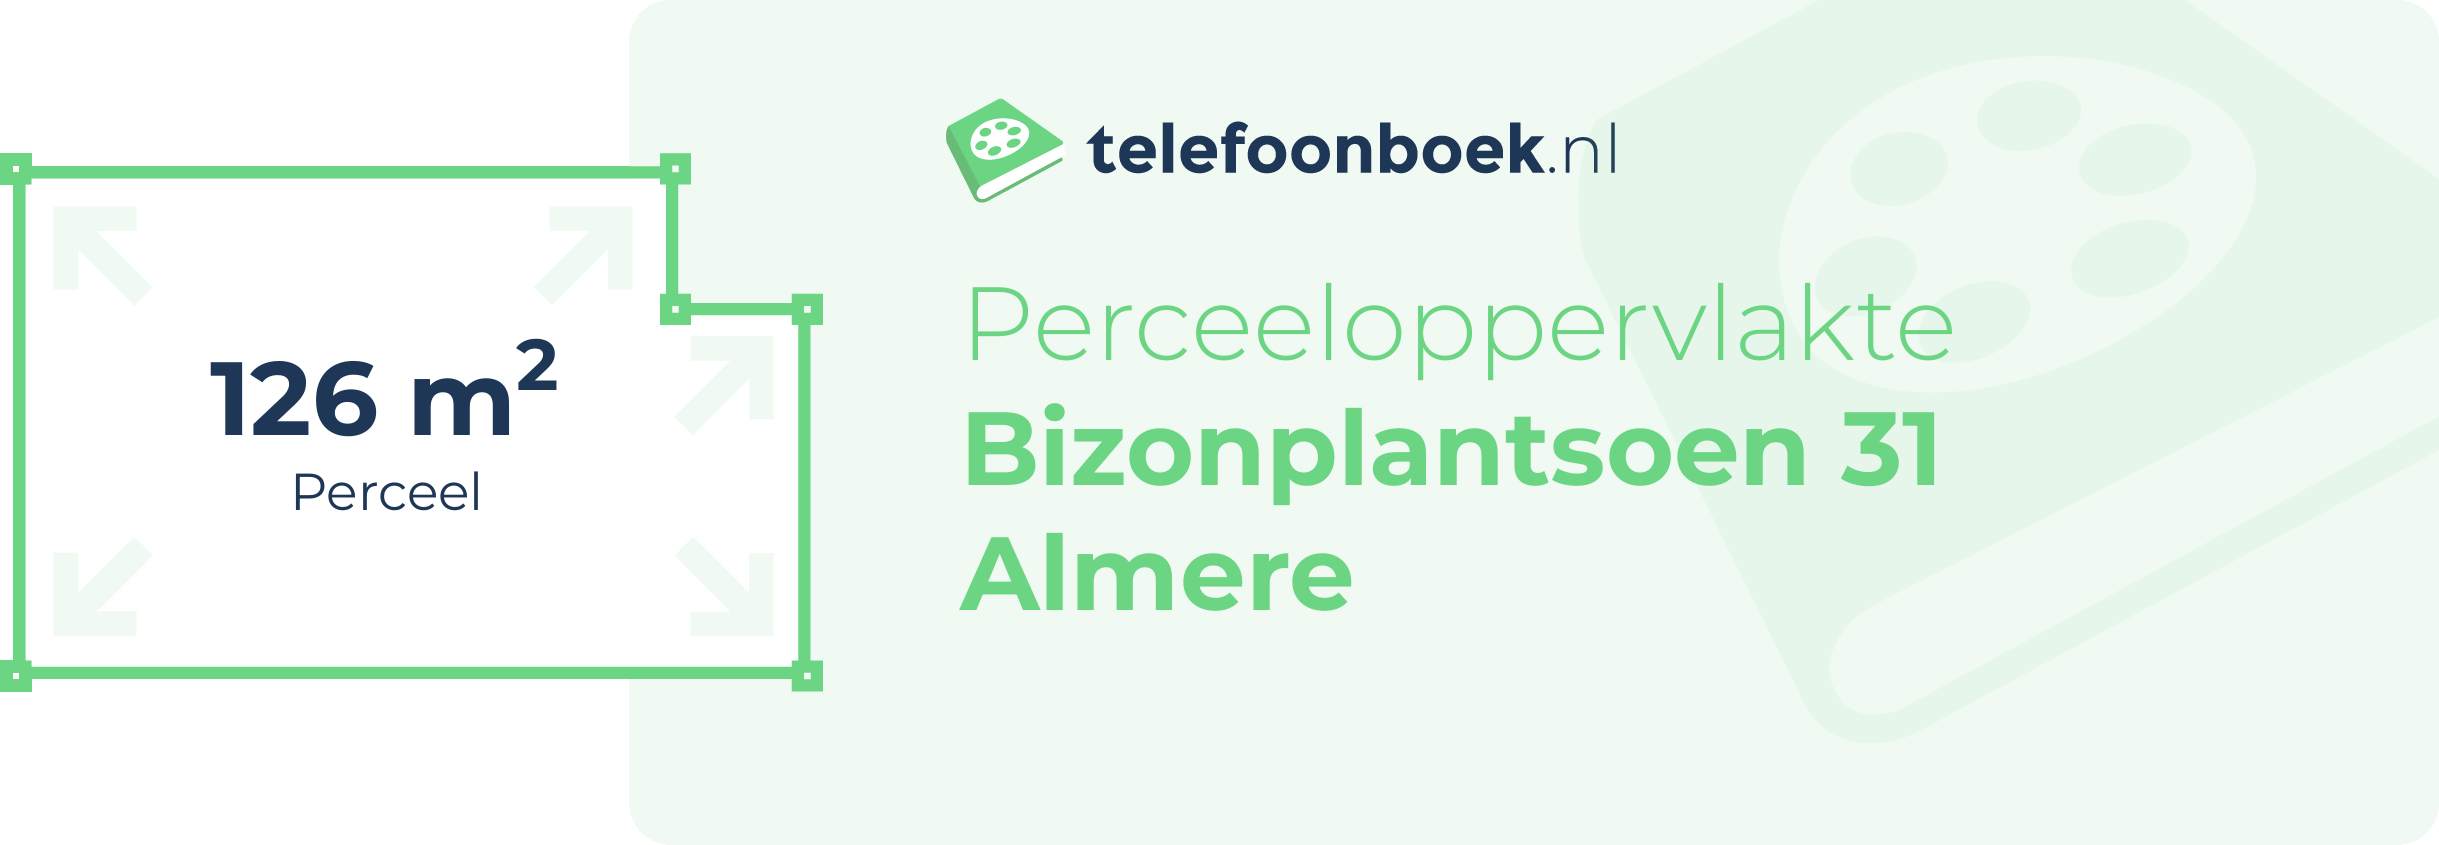 Perceeloppervlakte Bizonplantsoen 31 Almere